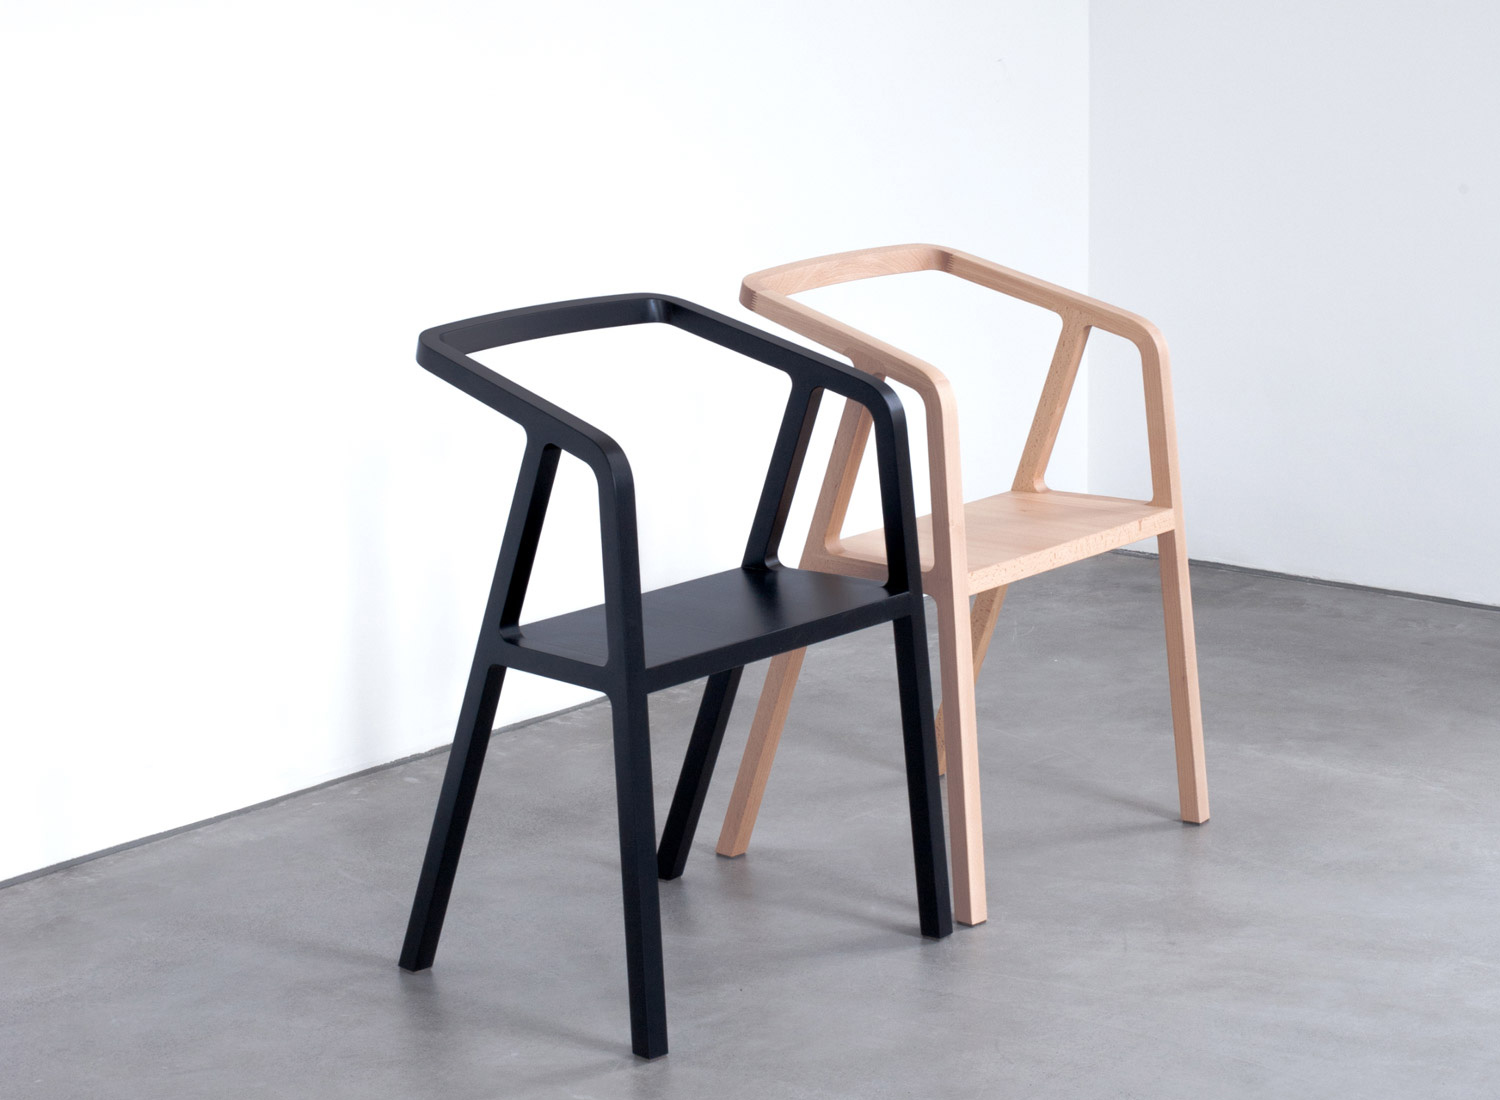 A-Chairs by Thomas Feichtner for Schmidinger Möbelbau